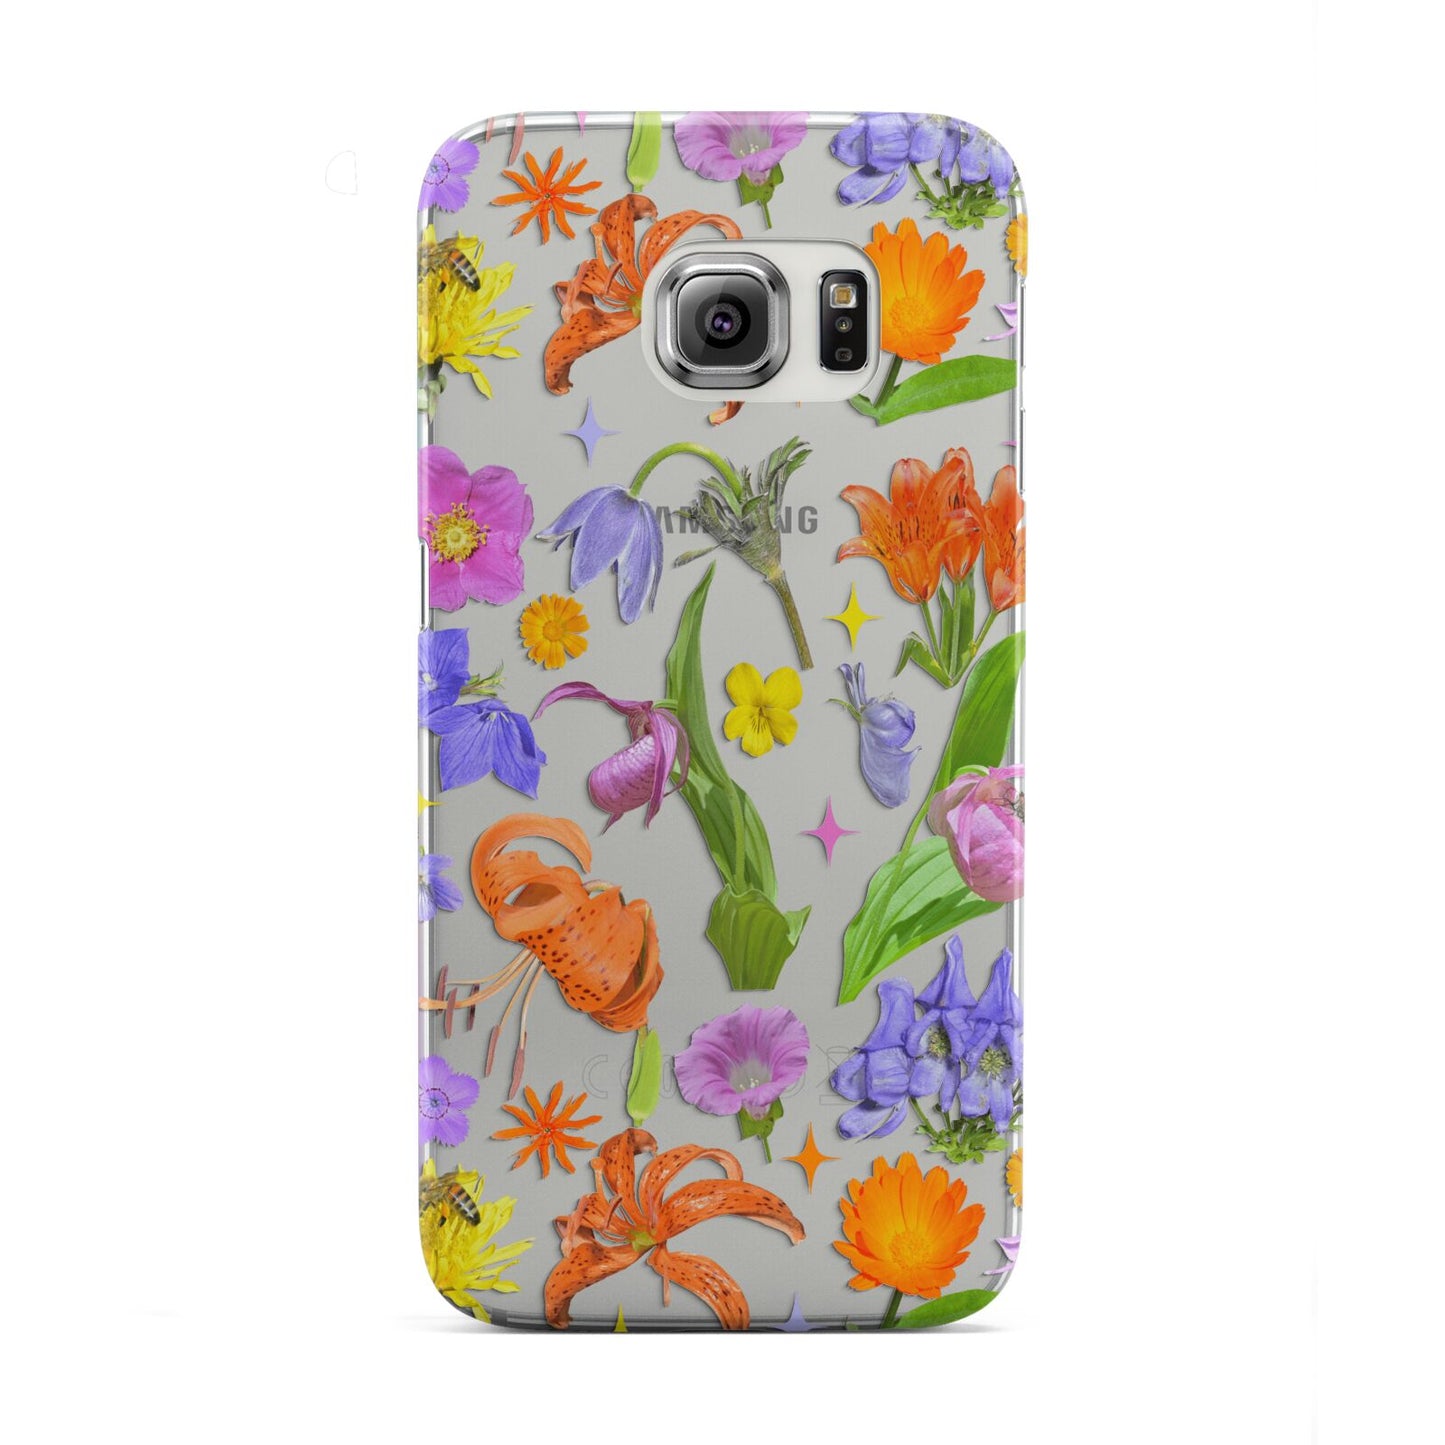 Floral Mix Samsung Galaxy S6 Edge Case